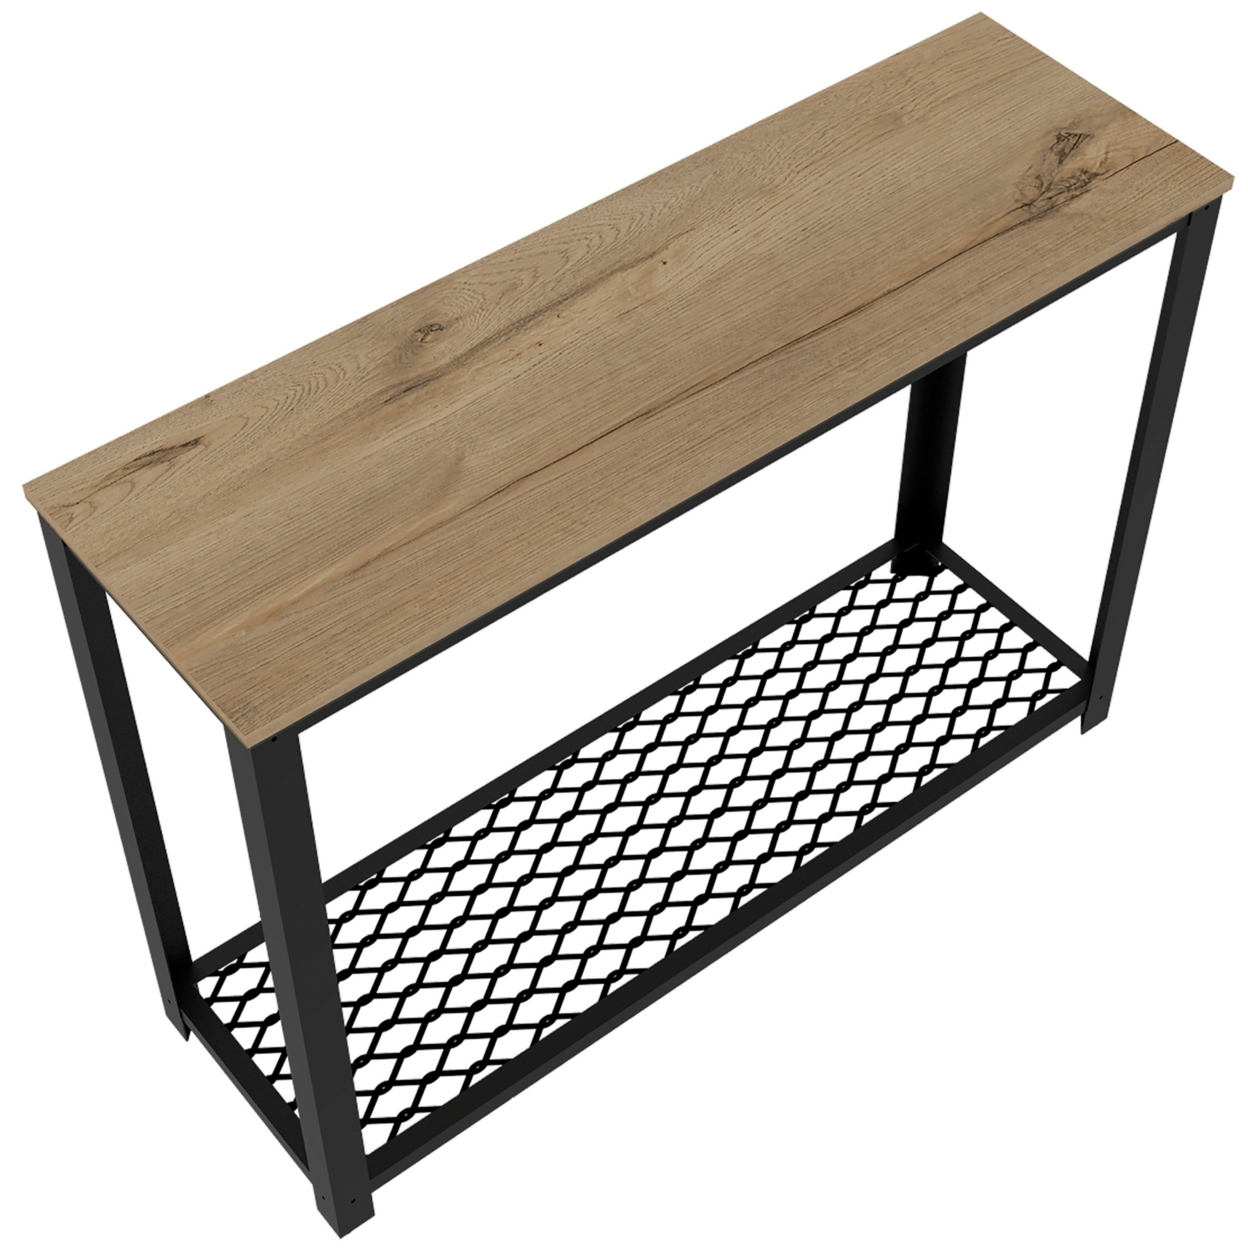 43 Inch Sideboard Console Table, 1 Mesh Design Shelf, Black Plated Steel- Saltoro Sherpi